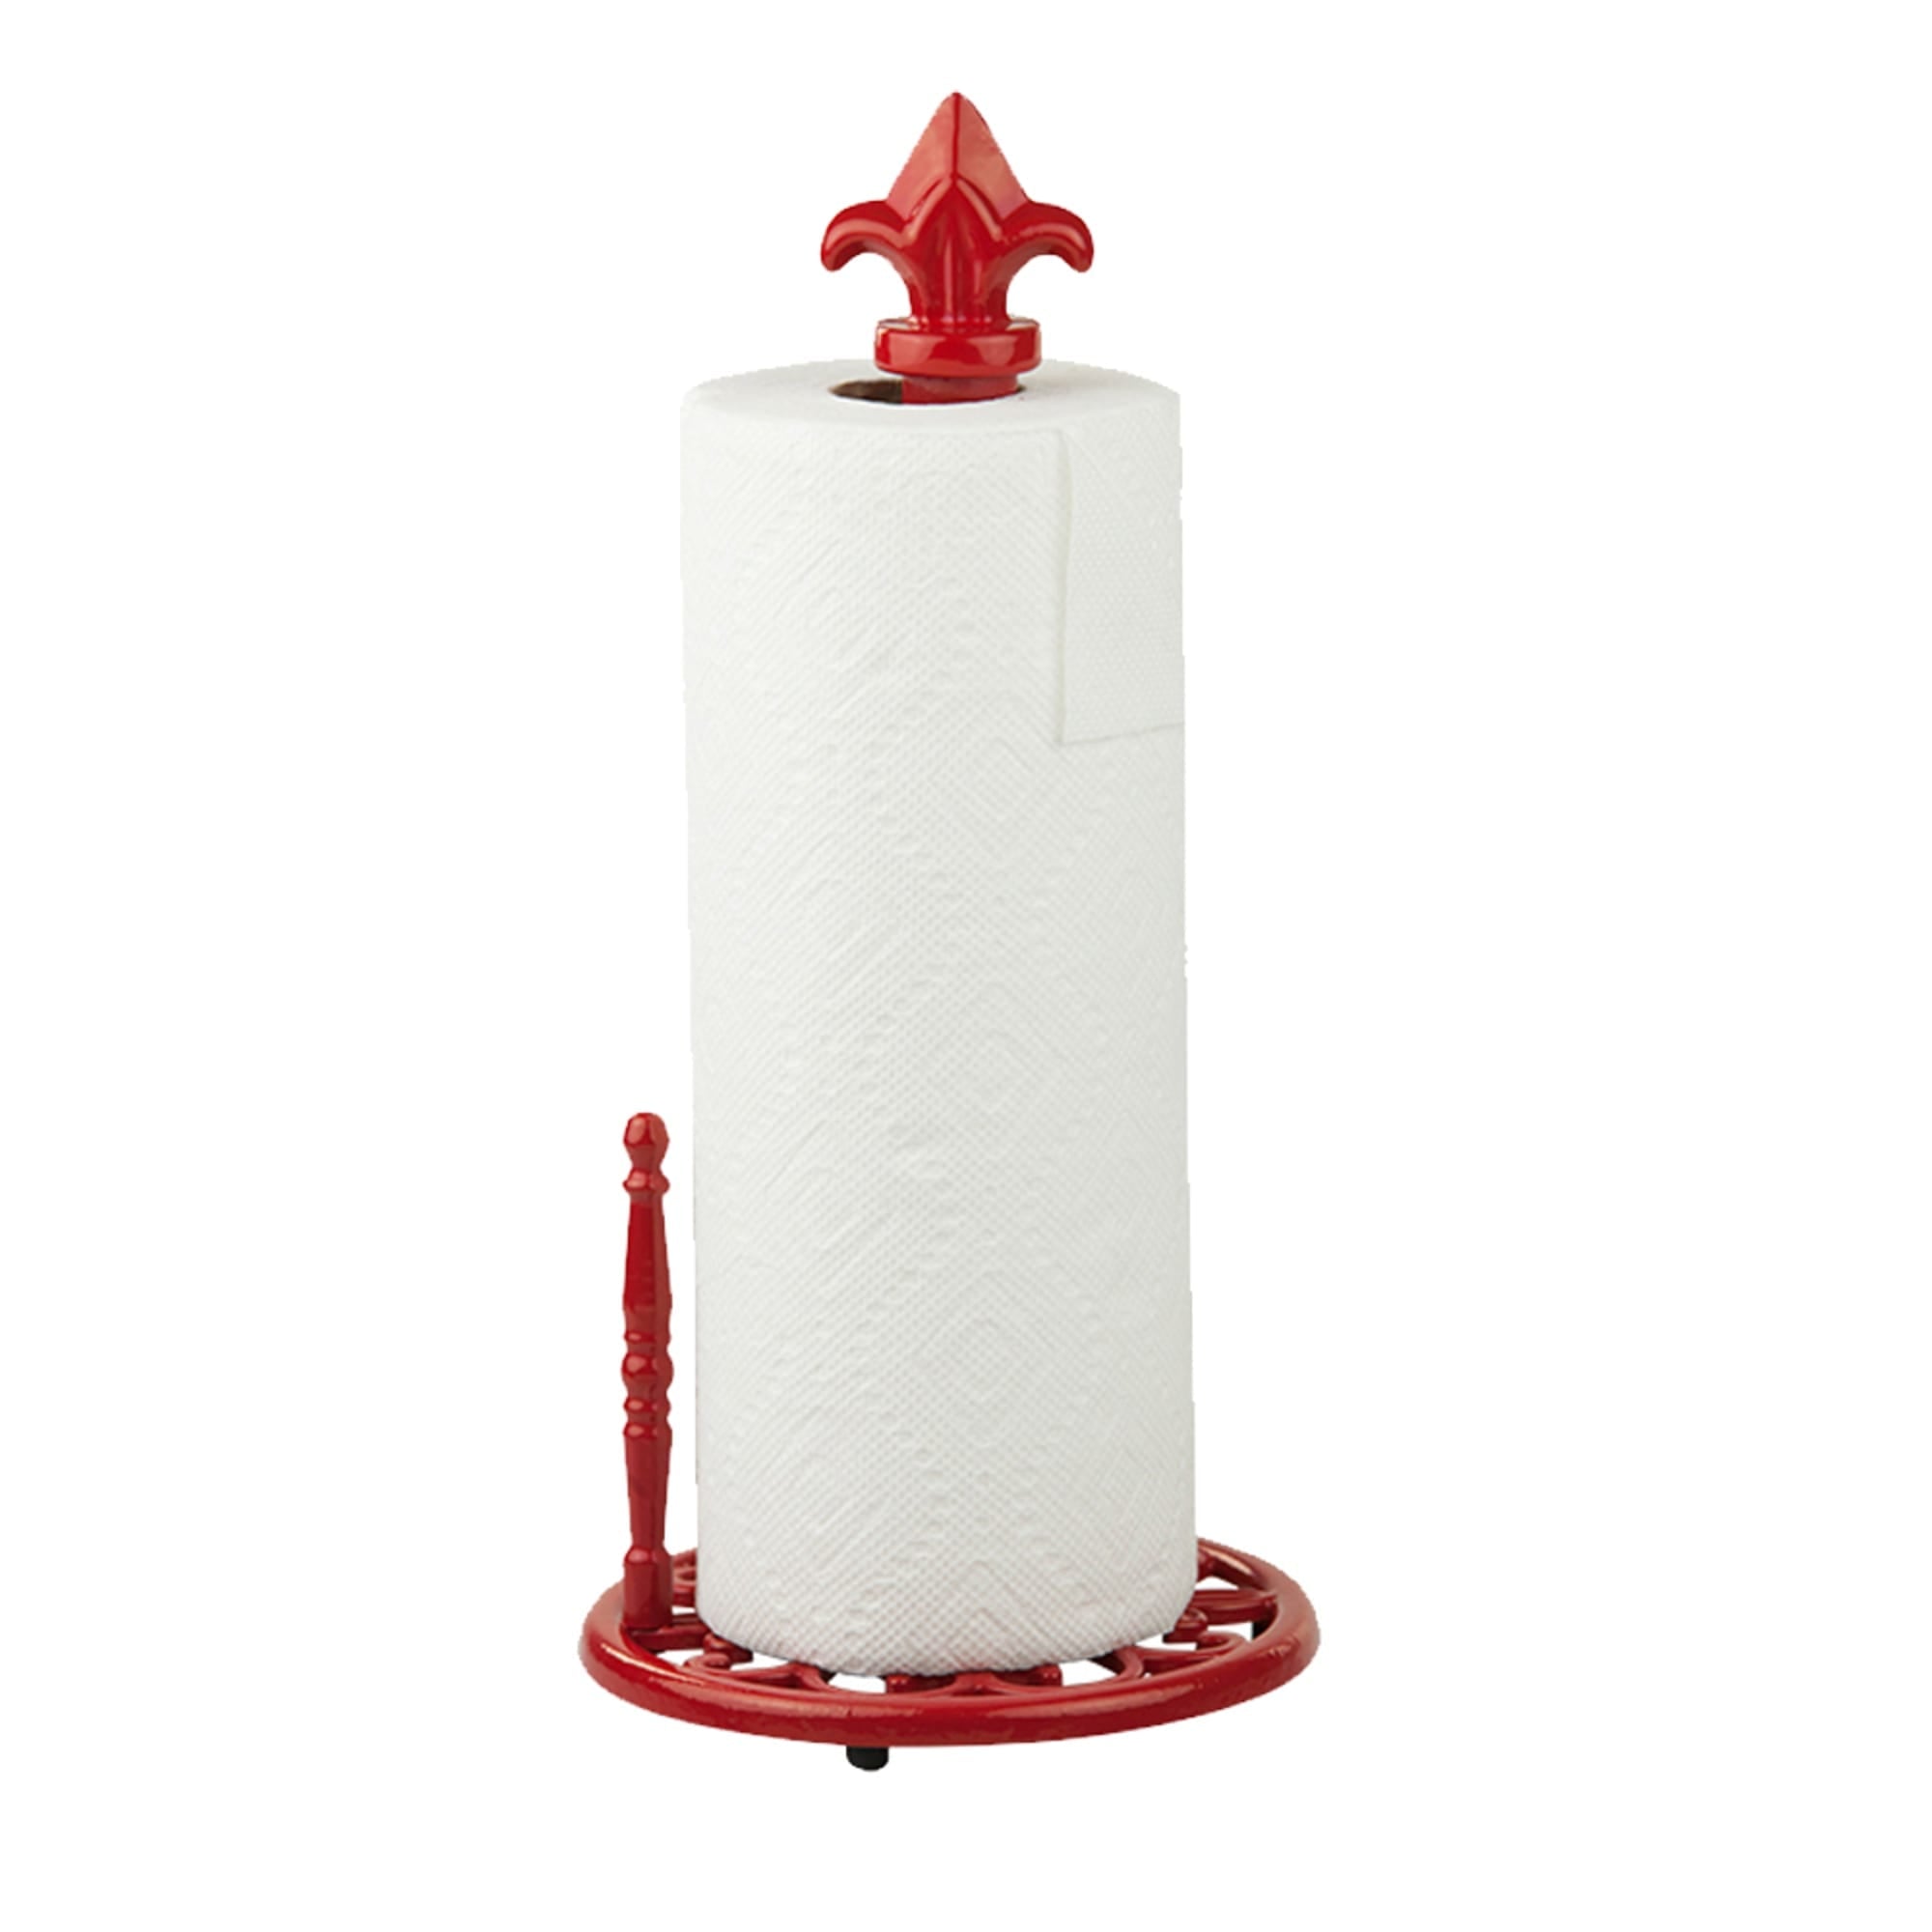 Home Basics Cast Iron Fleur De Lis Paper Towel Holder, Red $10.00 EACH, CASE PACK OF 3